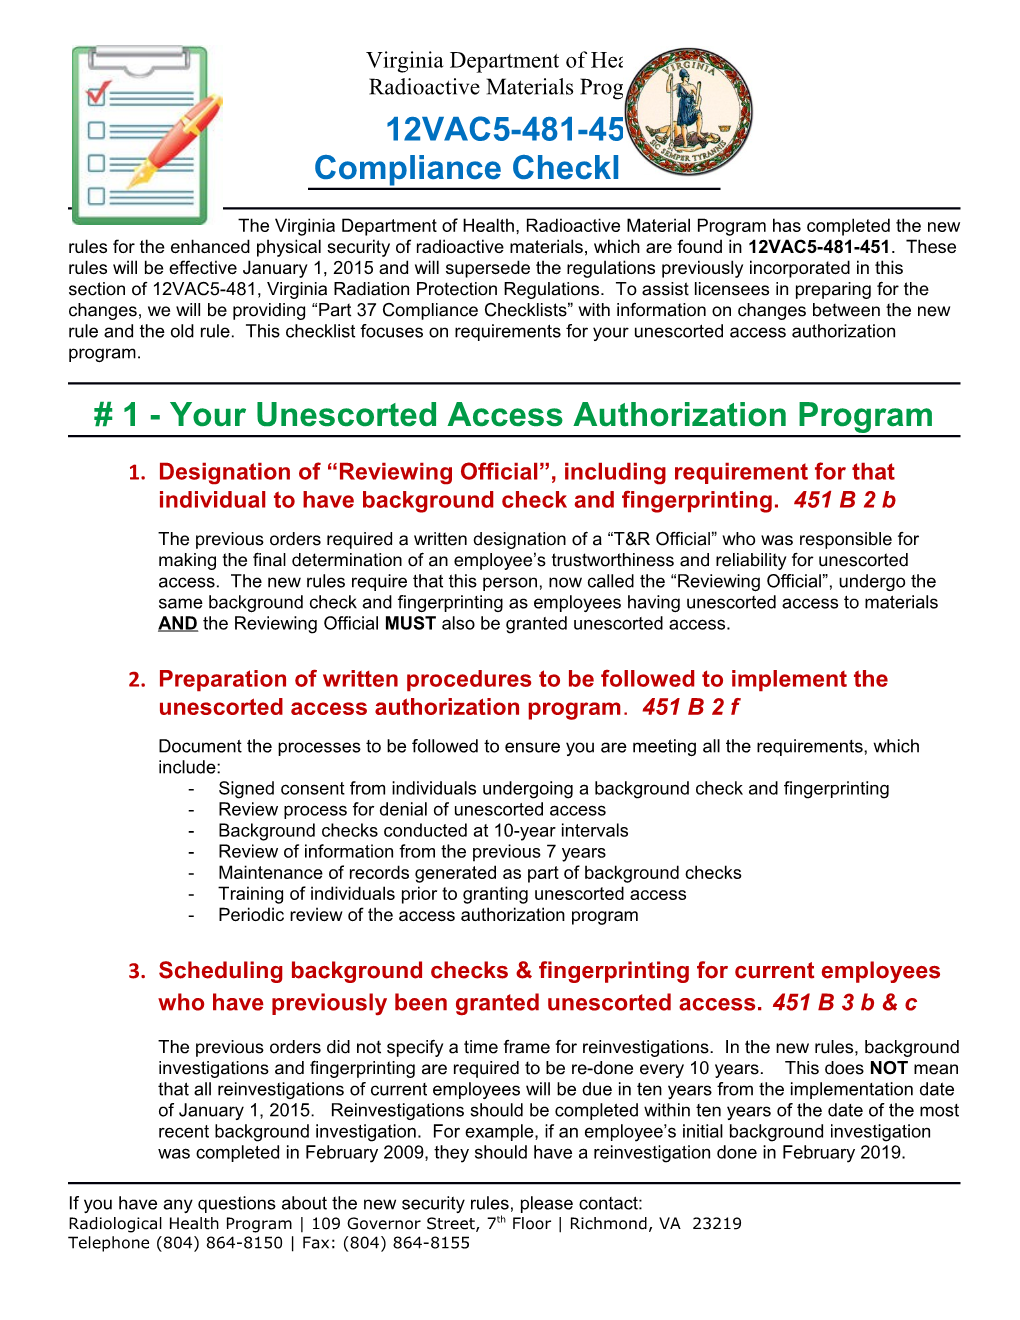 1 - Your Unescorted Access Authorization Program